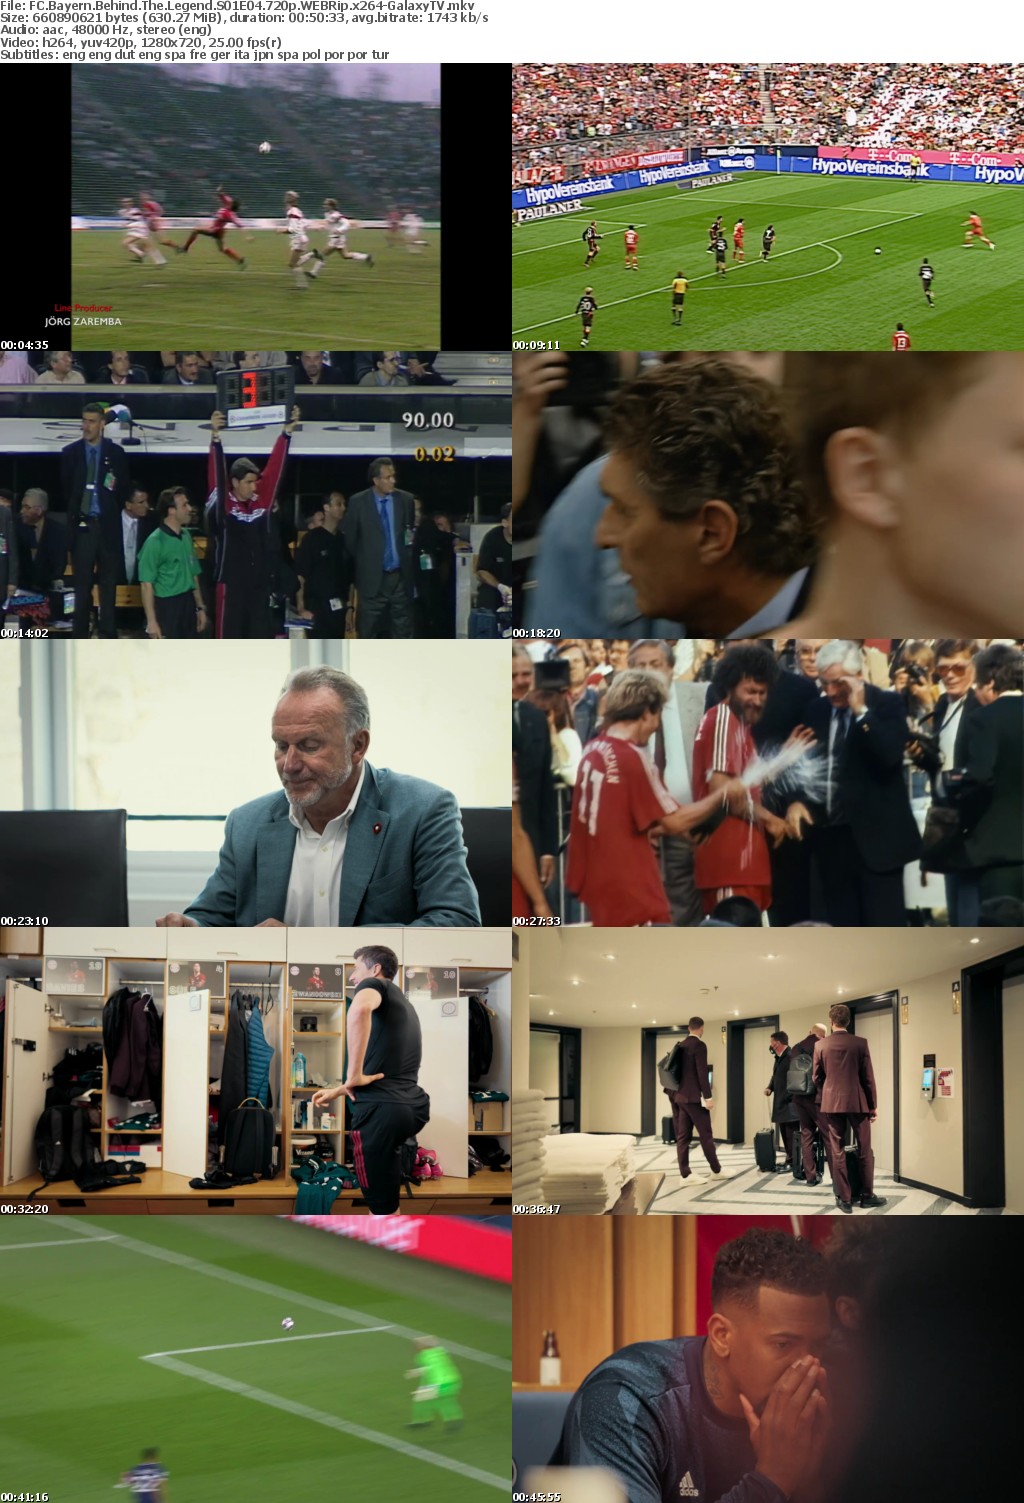 FC Bayern Behind The Legend S01 COMPLETE 720p WEBRip x264-GalaxyTV